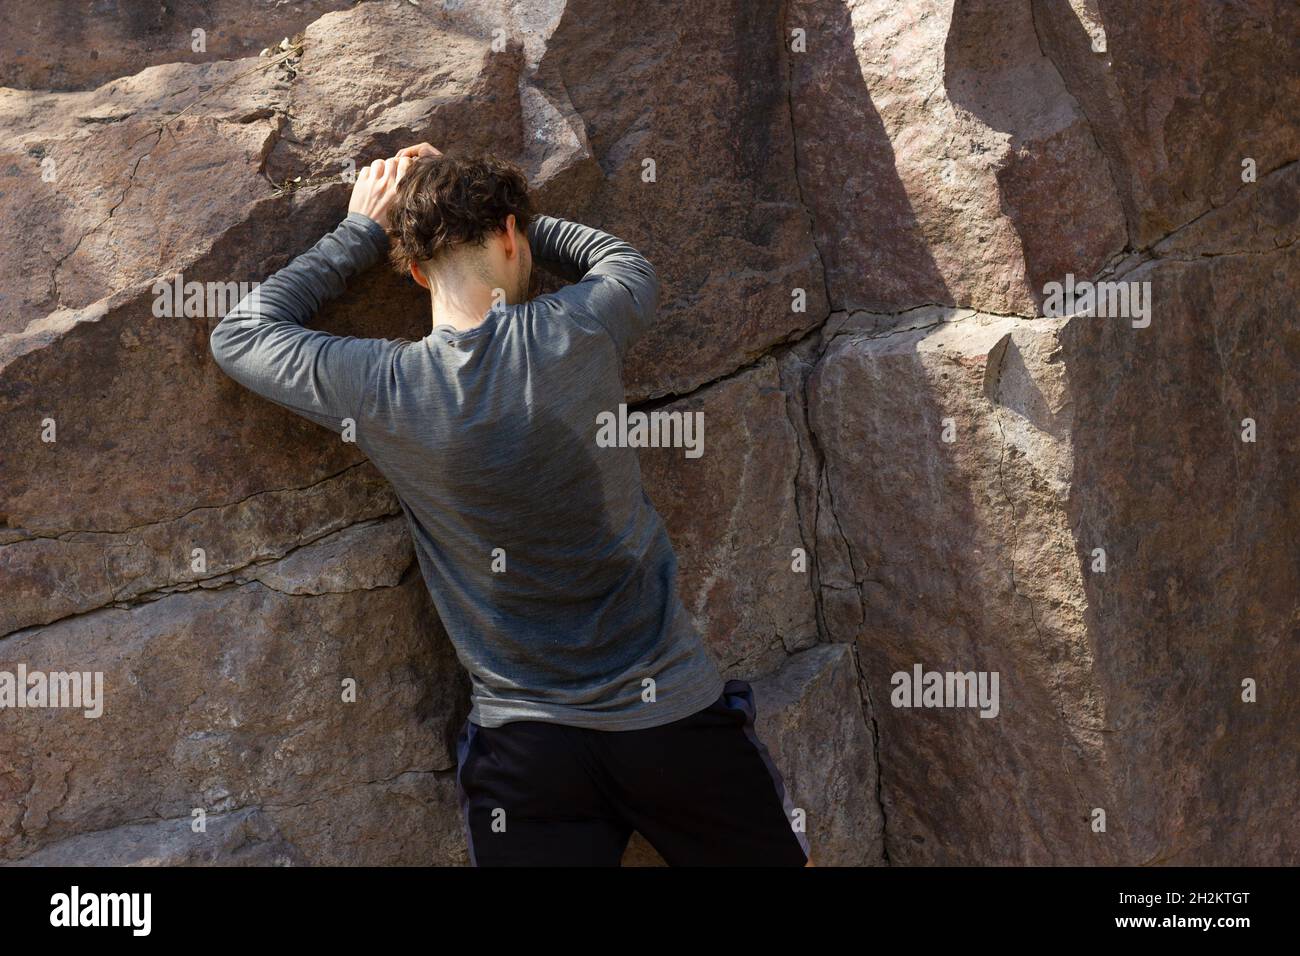 Schweißtreibender junger Mann, der sich am sonnigen, heißen Tag am Felsen festhält. Outdoor-Workout, Kampf, Erkundungskonzepte Stockfoto